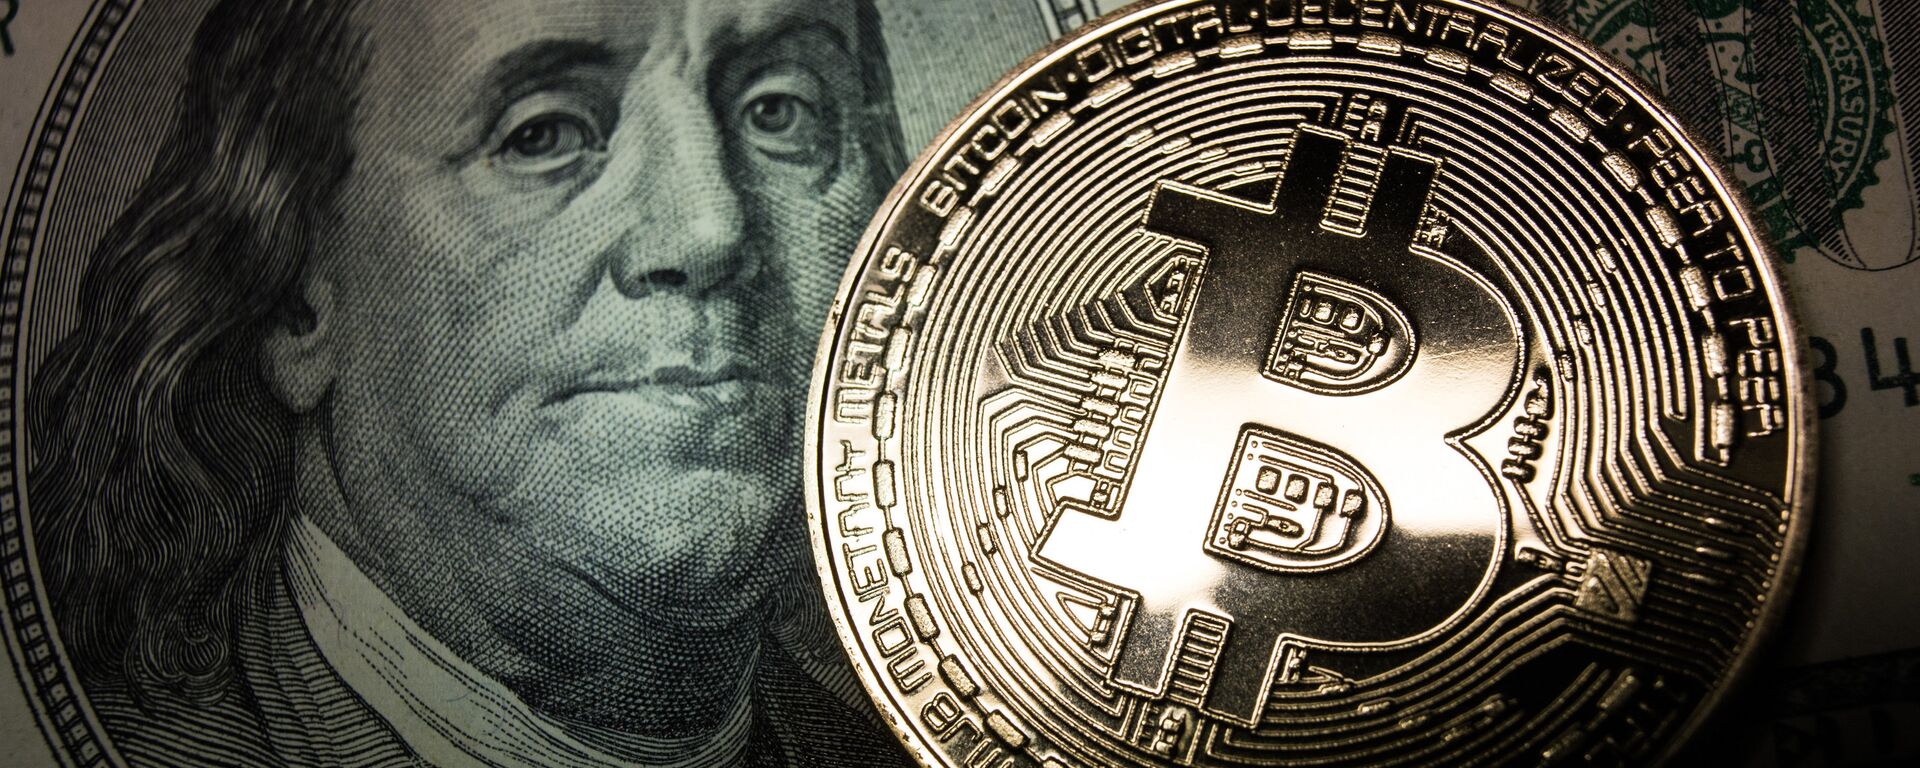 Bitcoin y un billete de dólar - Sputnik Mundo, 1920, 22.03.2021